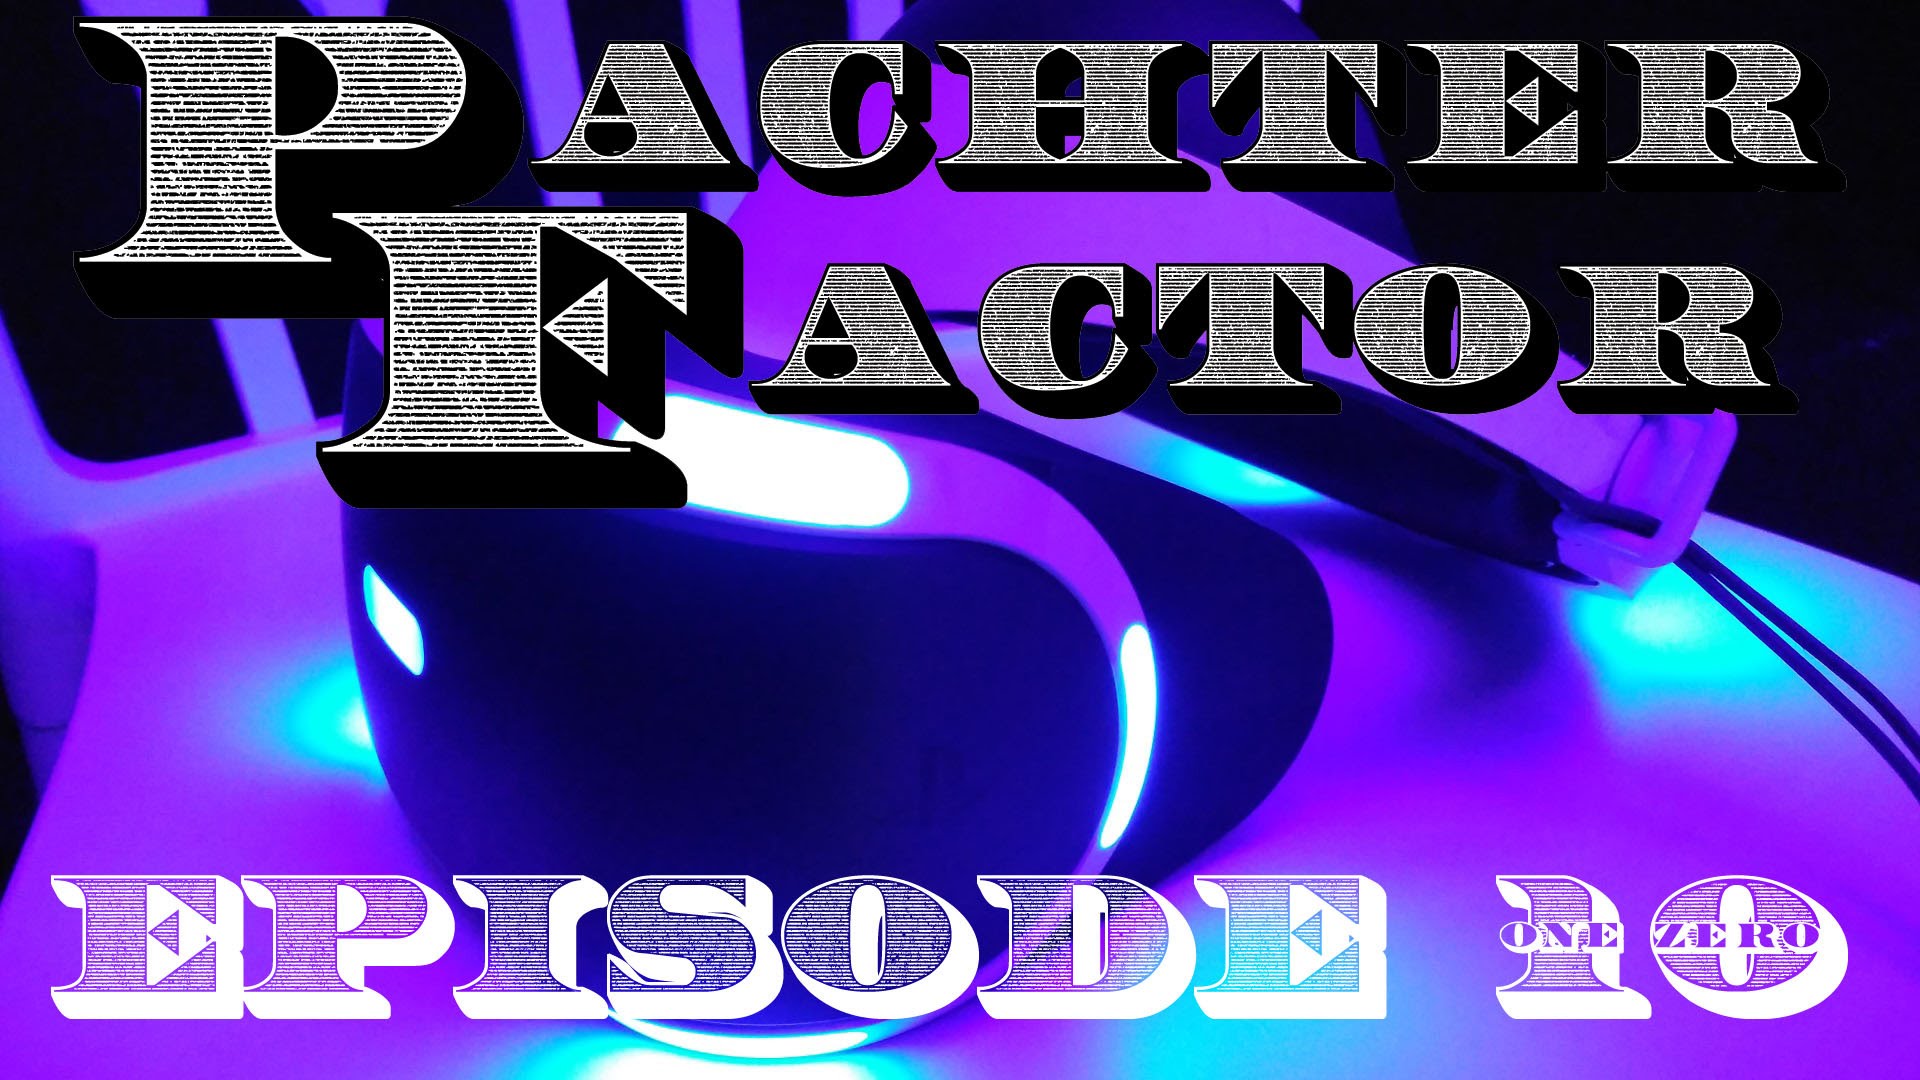 Pachter Factor episodio 10